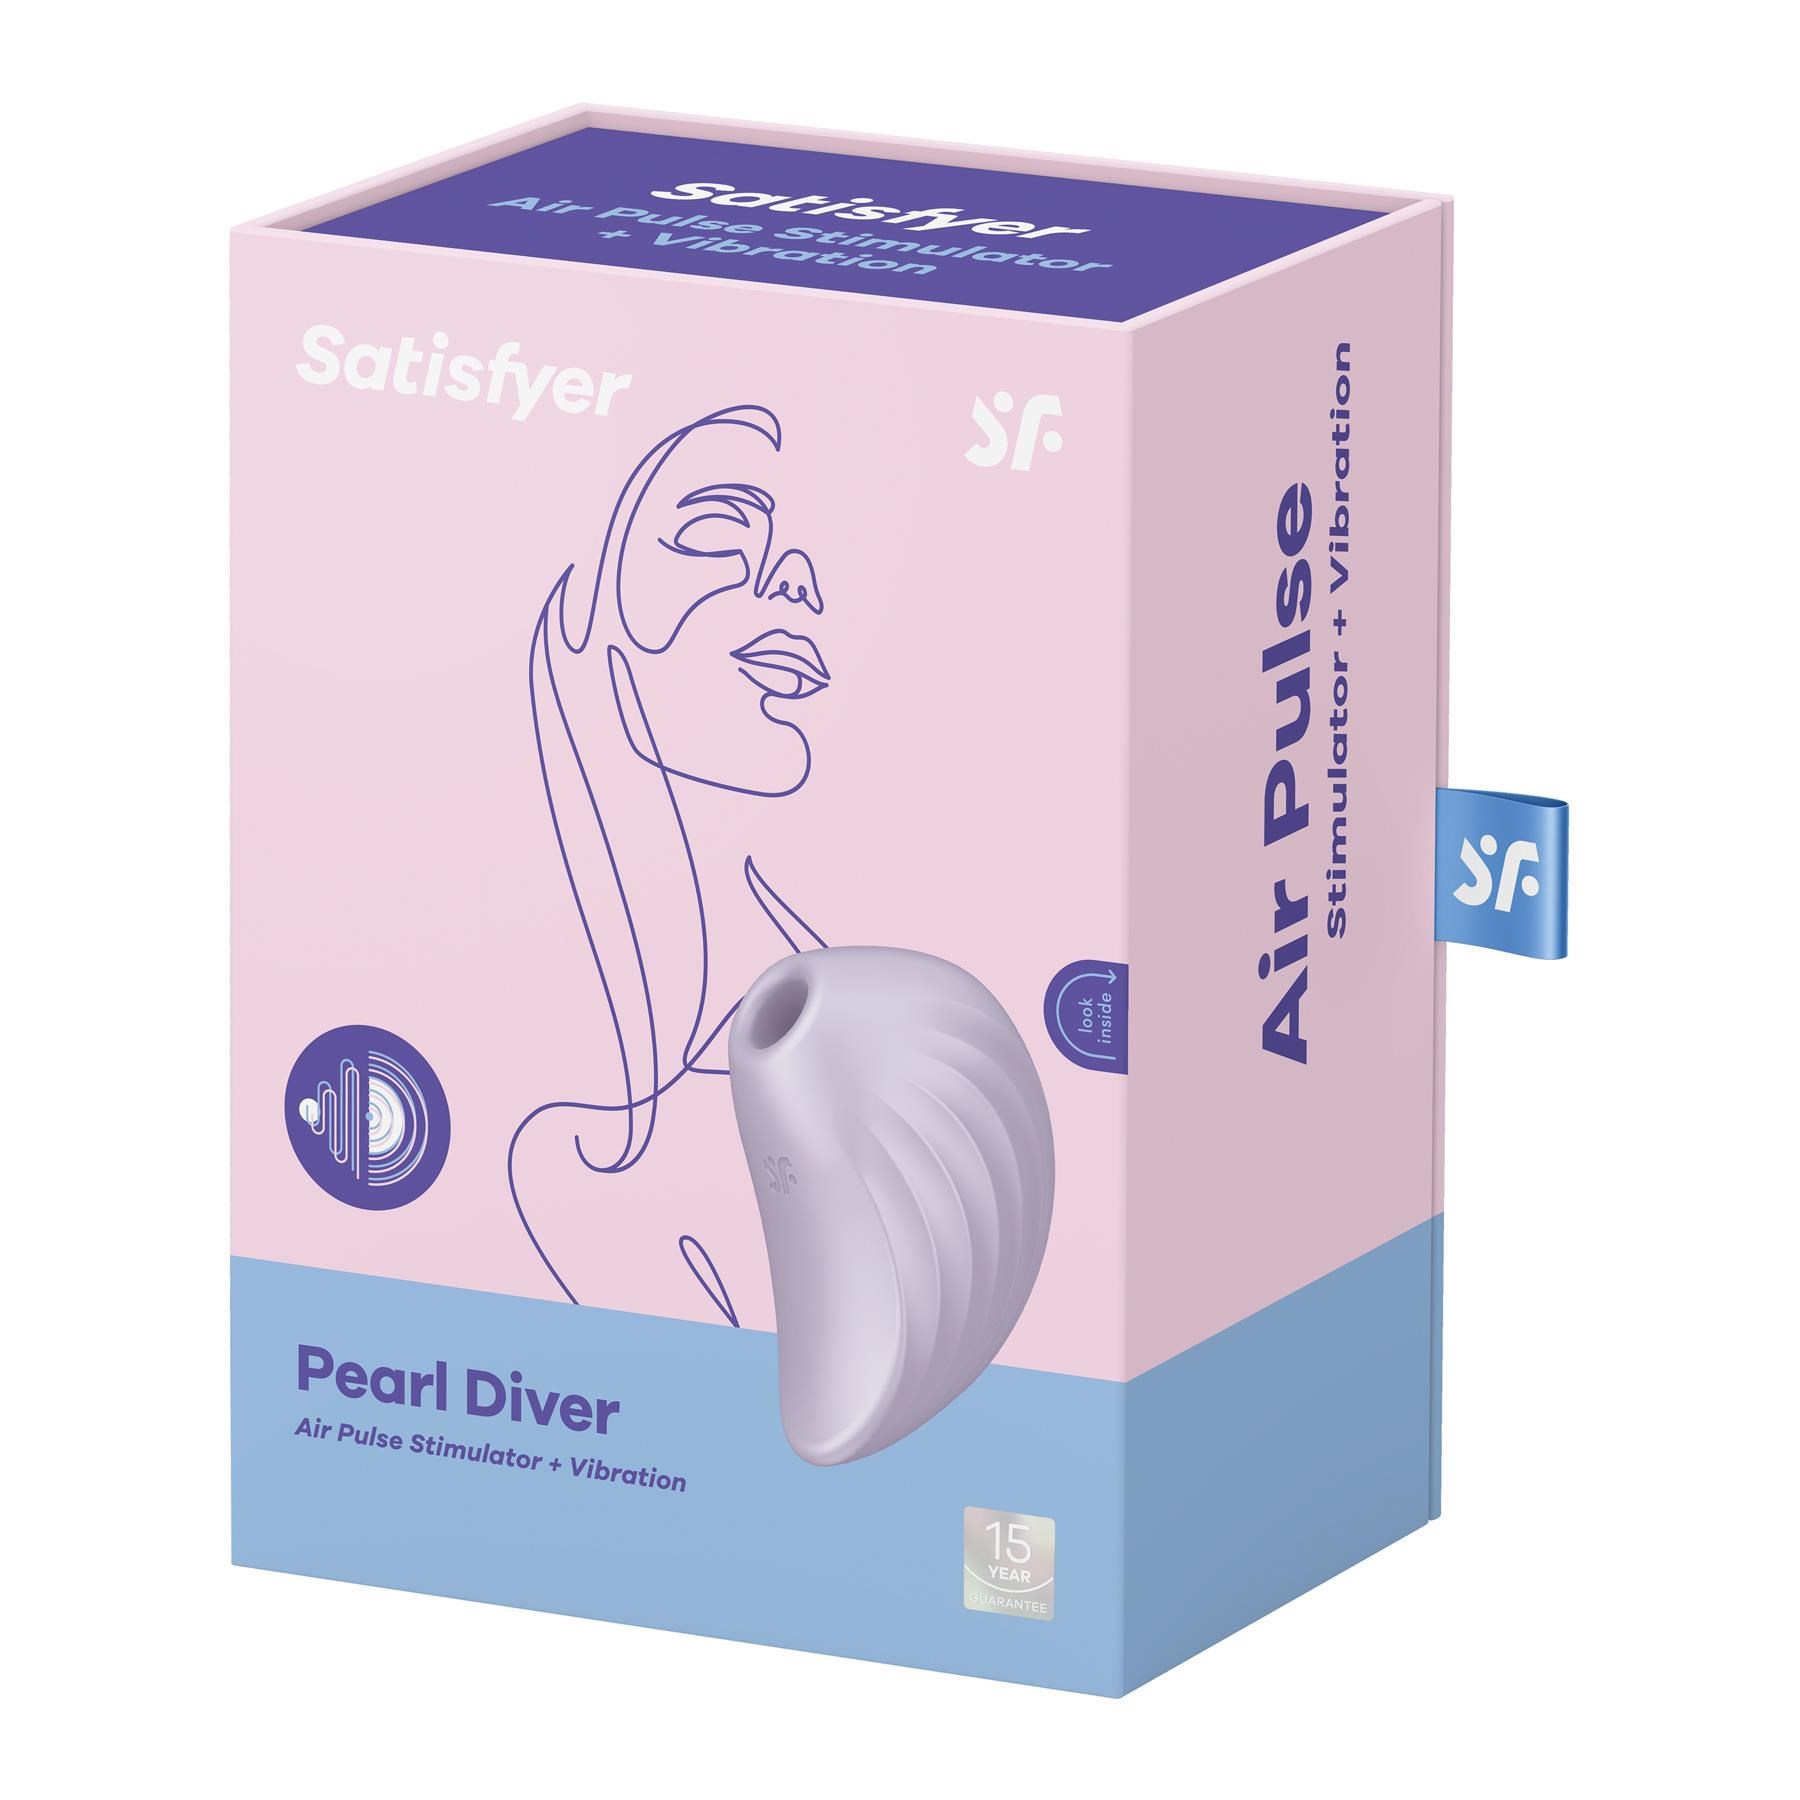 Satisfyer Pearl Diver Air Pulse Clitoral Stimulator - Packaging Shot